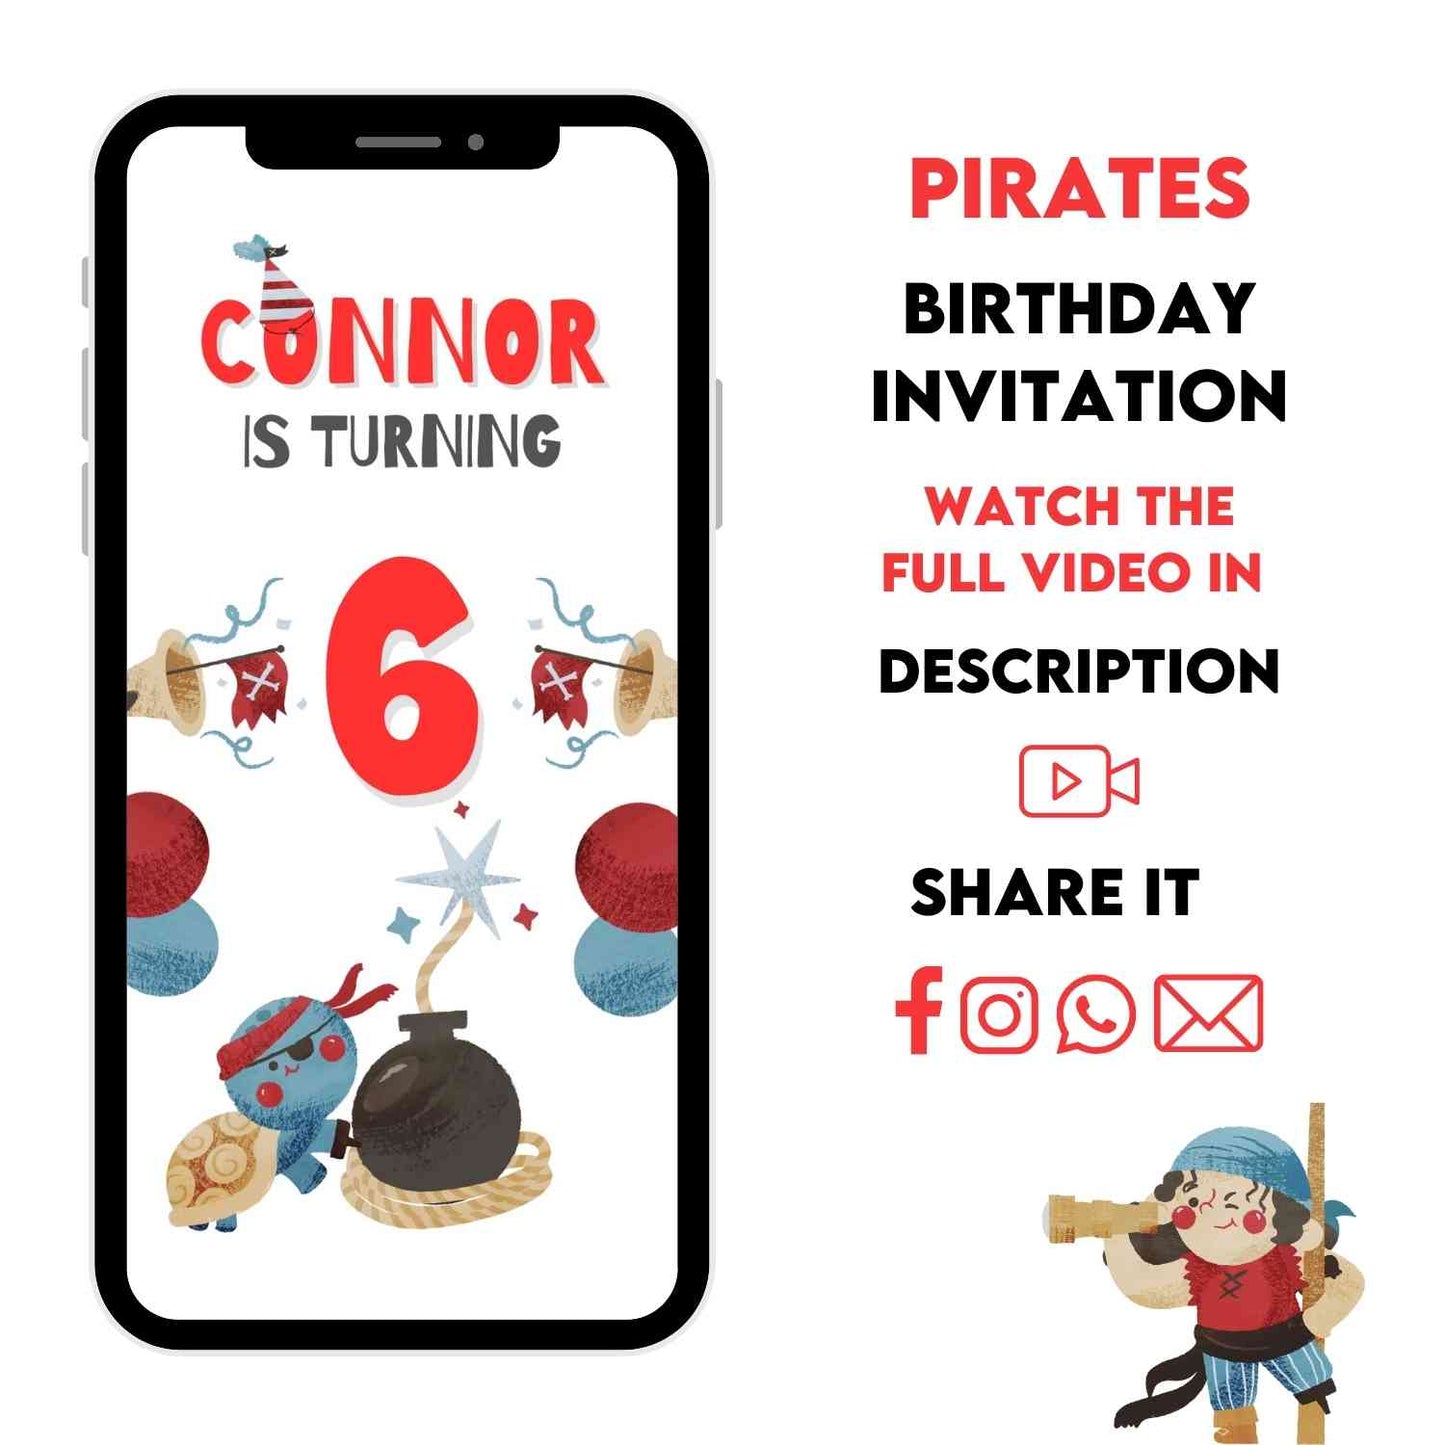 Pirates Birthday Video Invitation | Animated Birthday Party Invite